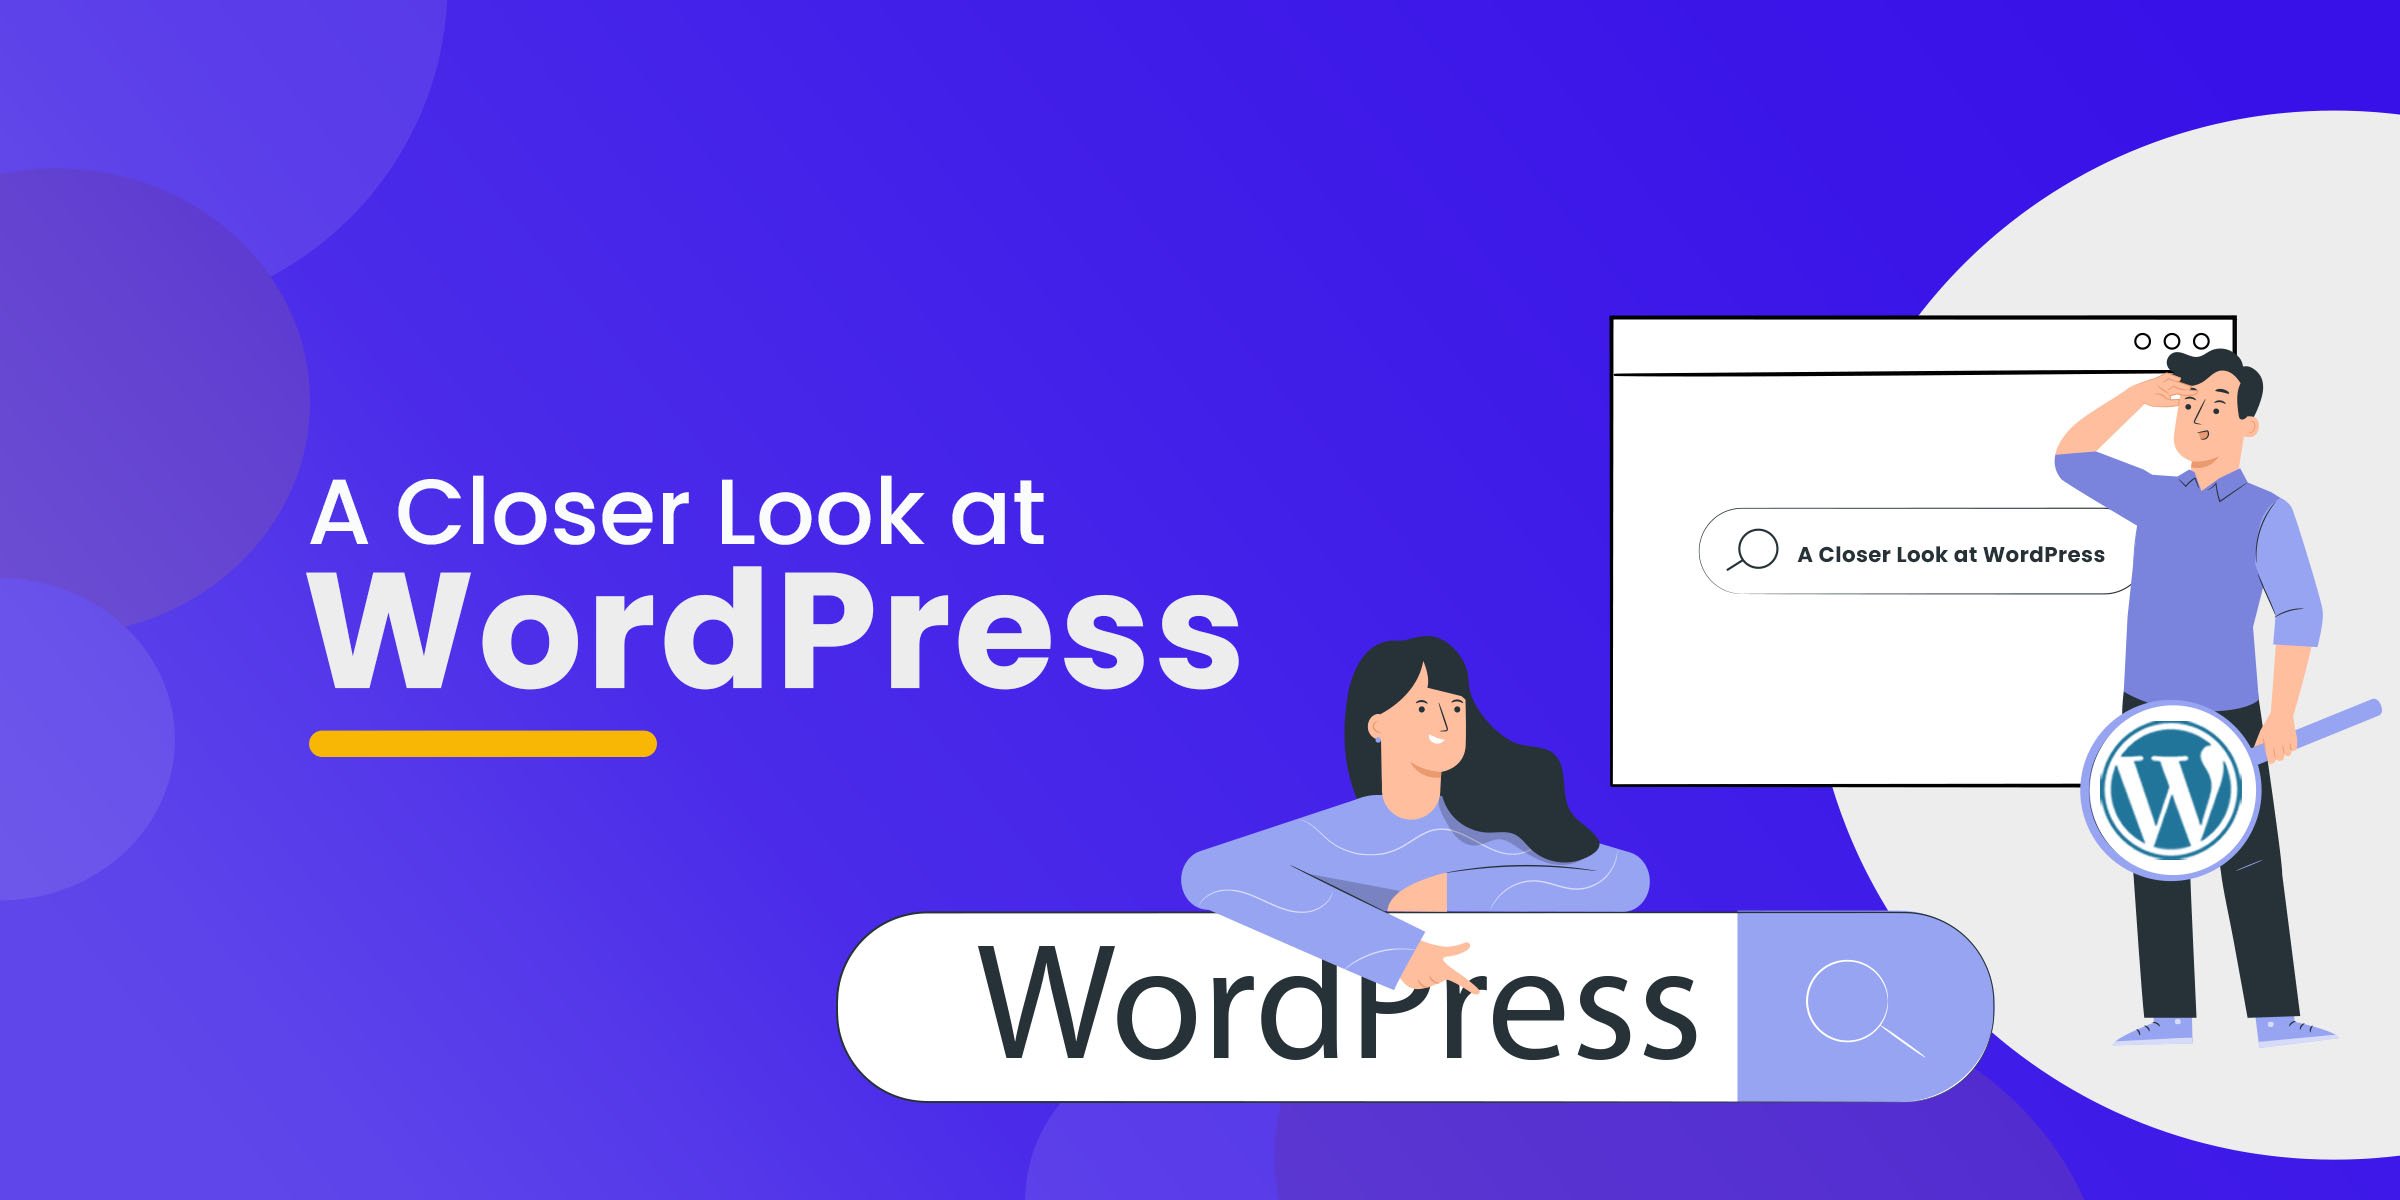 A Closer Look at WordPress